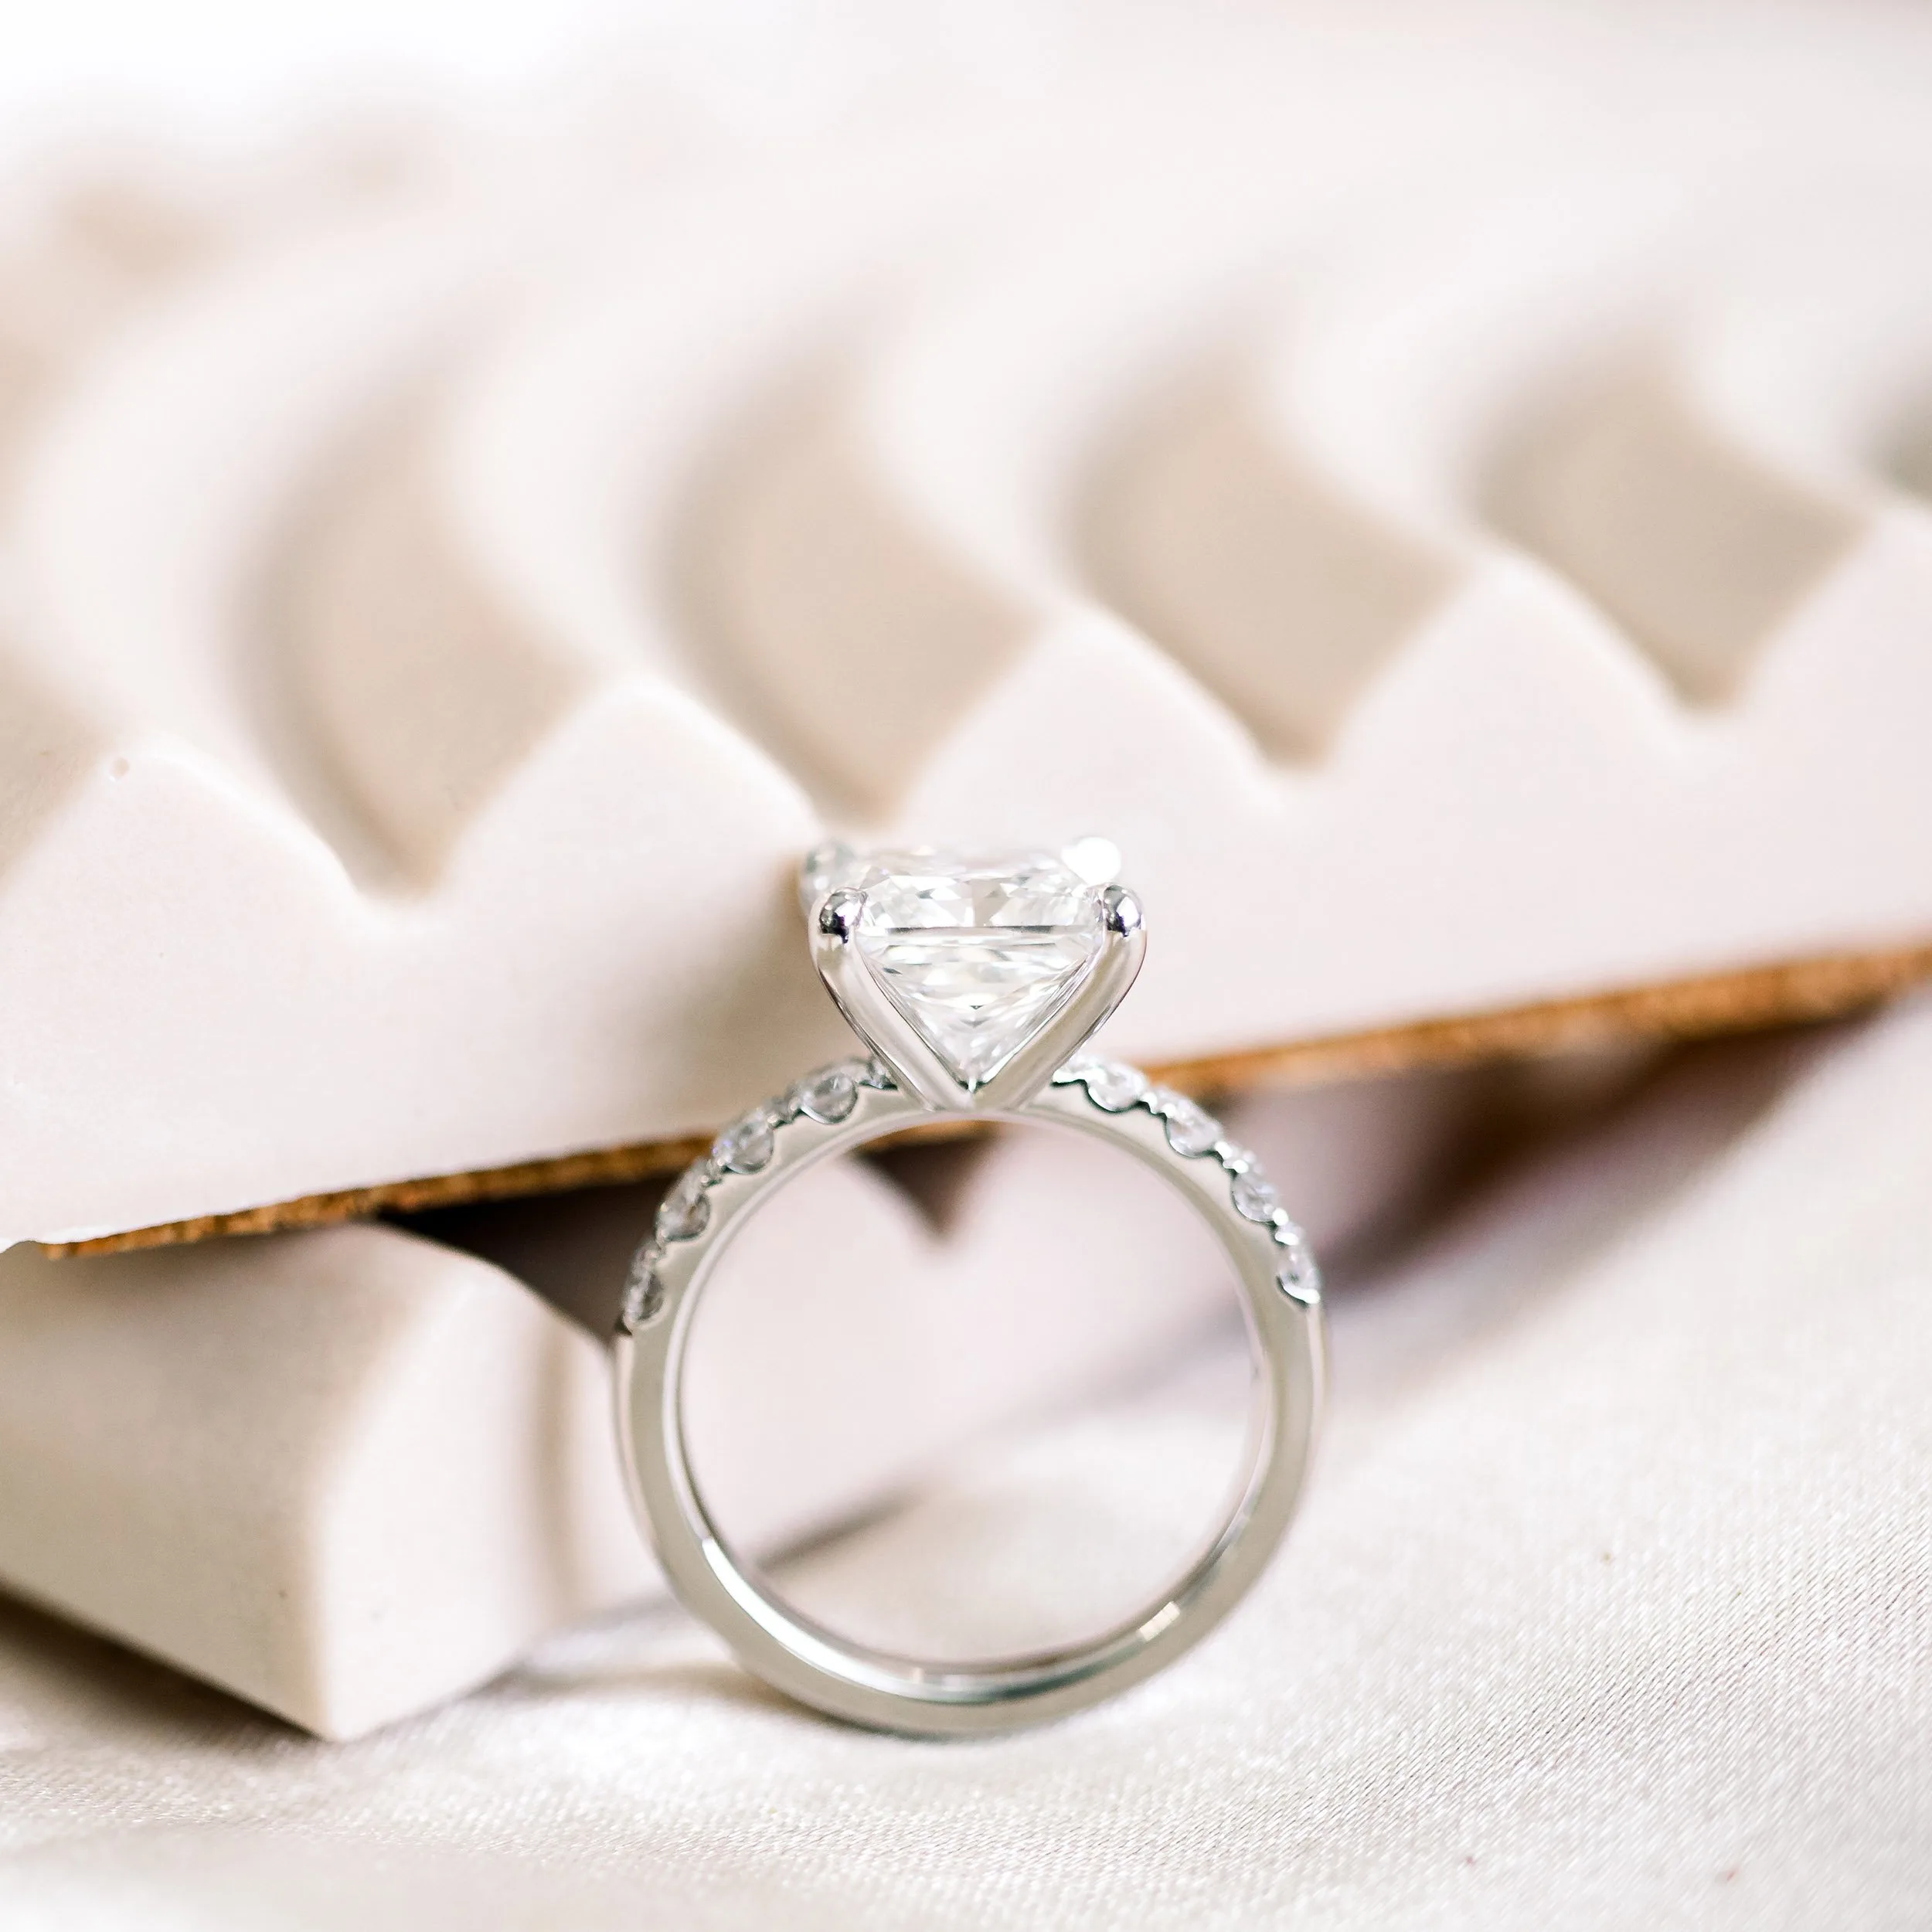 platinum 2.5 carat princess cut lab created diamond engagement ring with classic pavé band ada diamonds design ad 150 profile